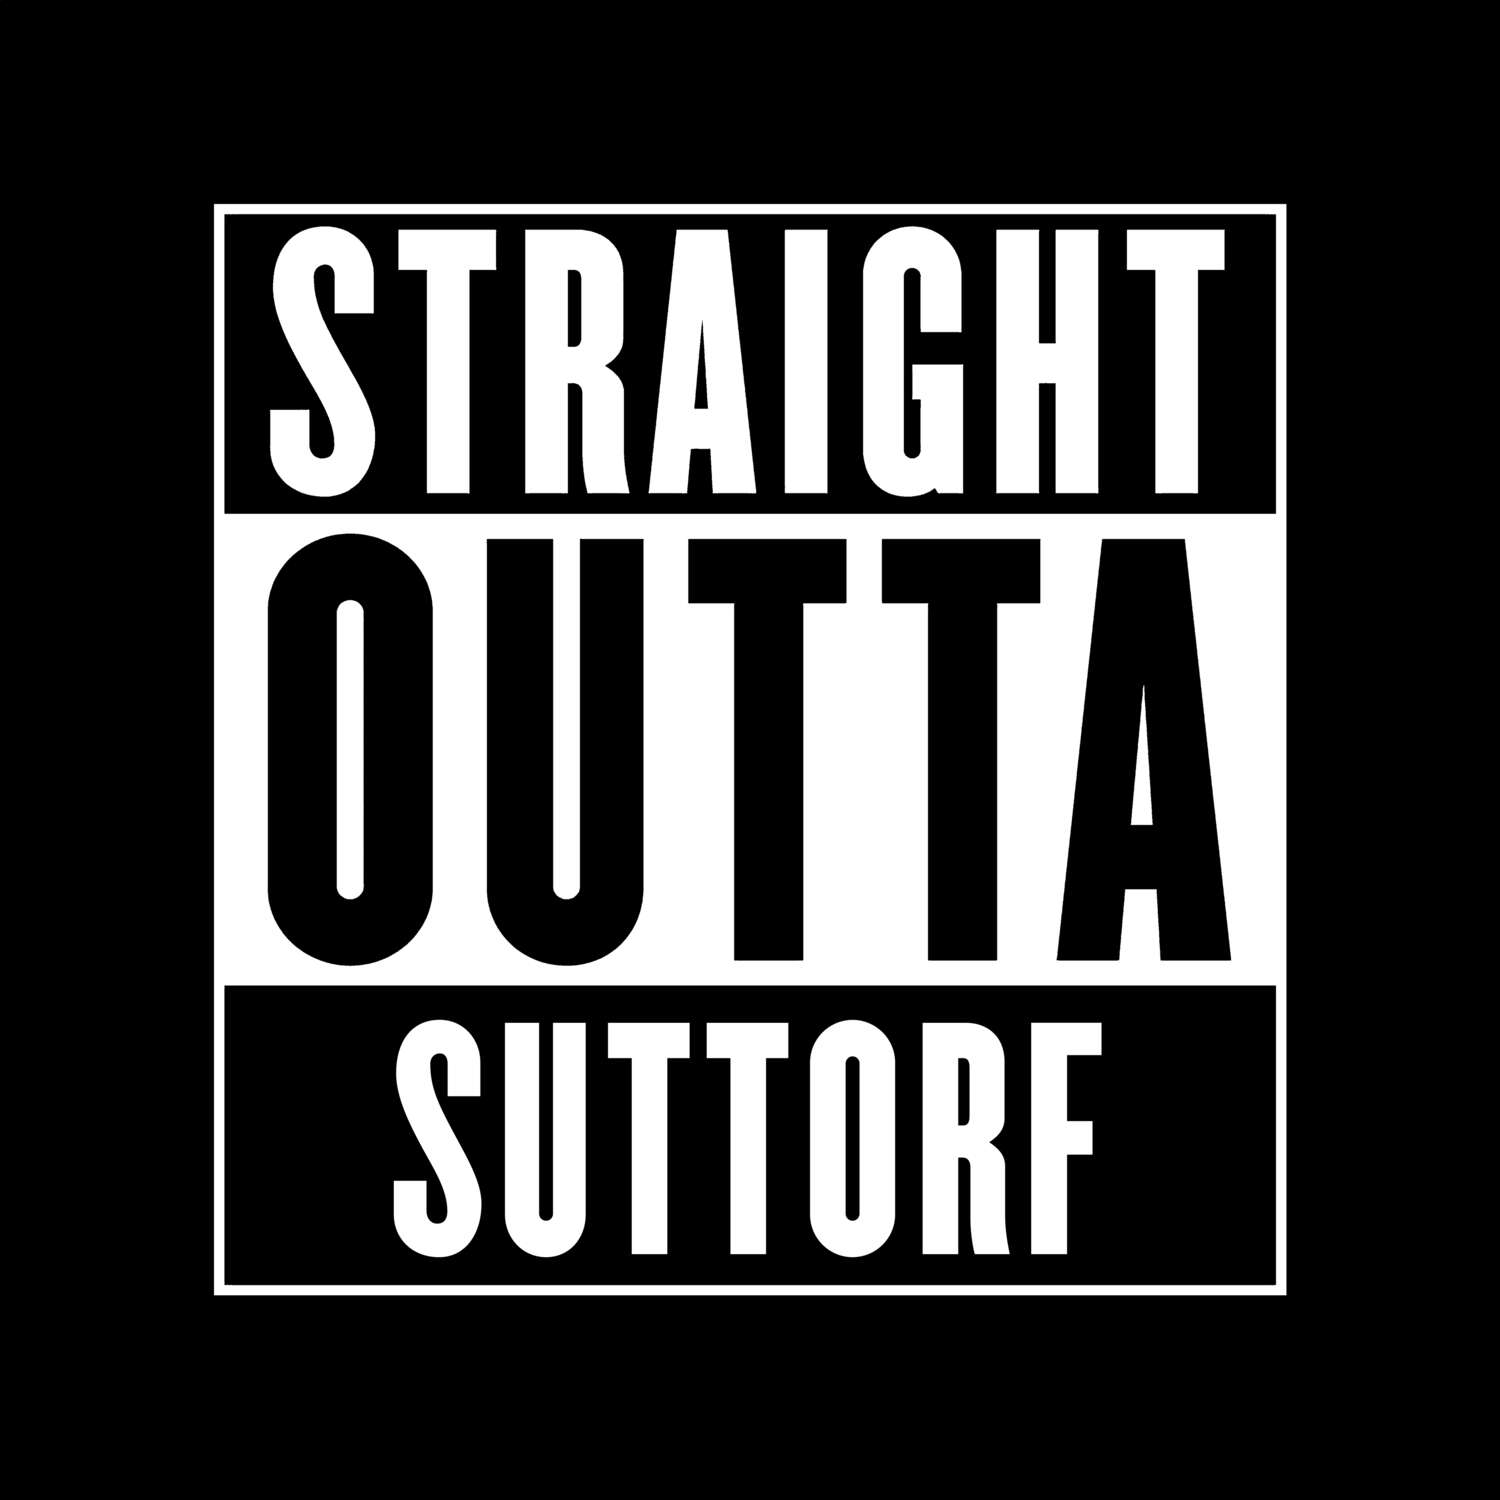 Suttorf T-Shirt »Straight Outta«